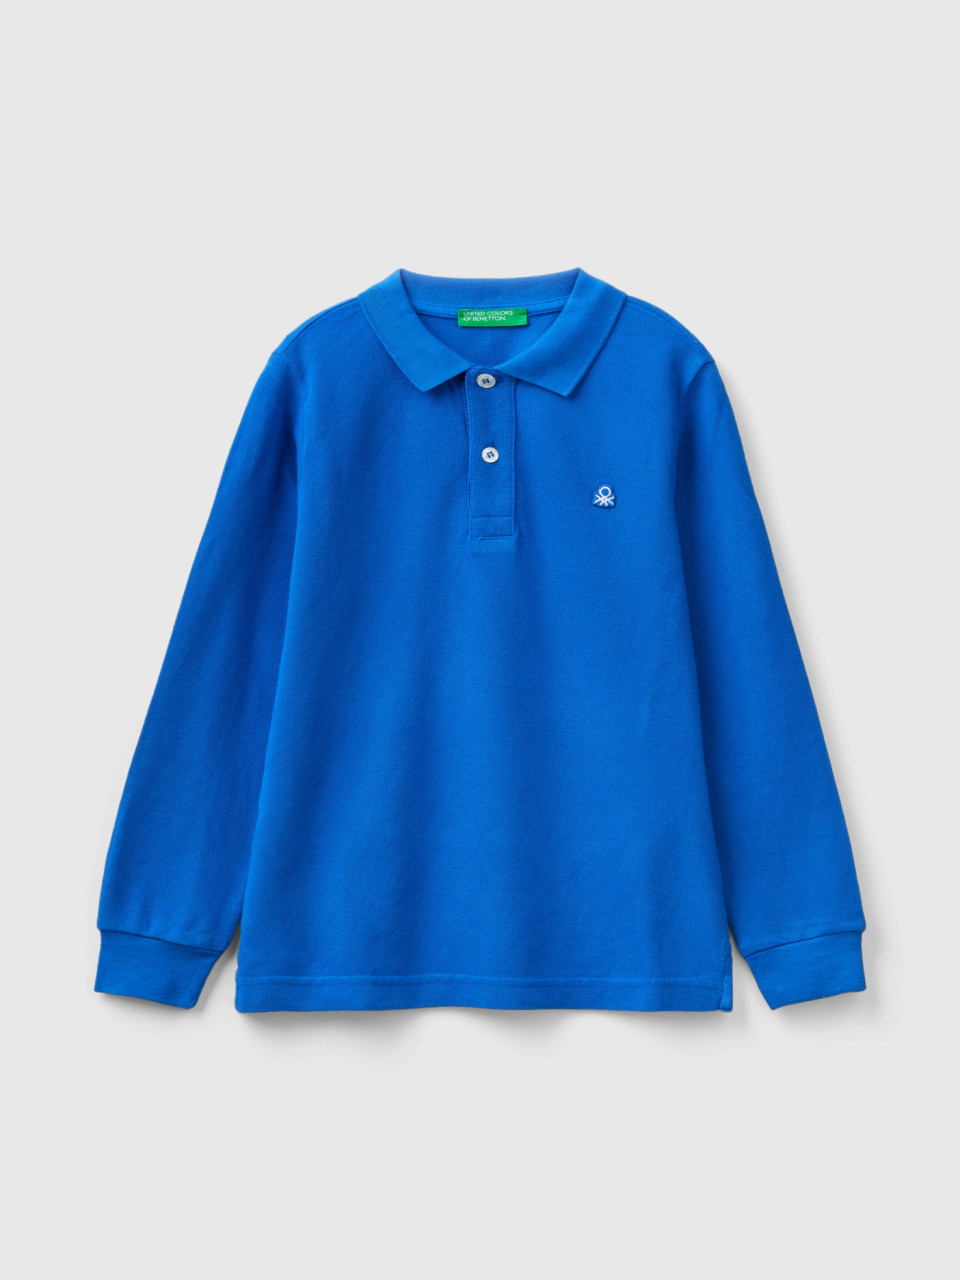 Benetton, 100% Organic Cotton Long Sleeve Polo, Bright Blue, Kids